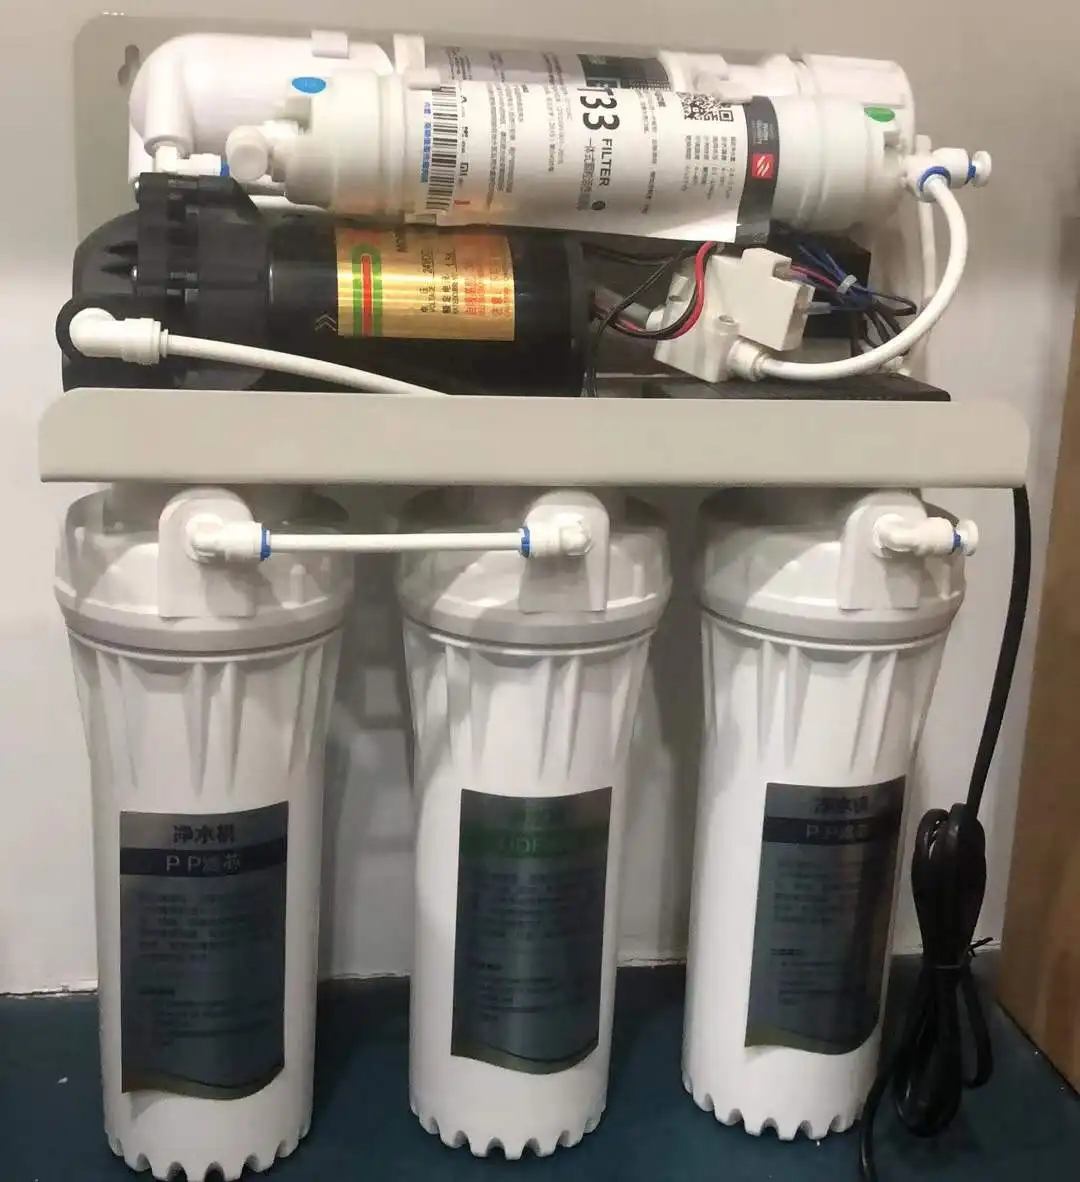 Smf water purifier 75G Roverse osmosis water purifier machine household filtre eau water purifier